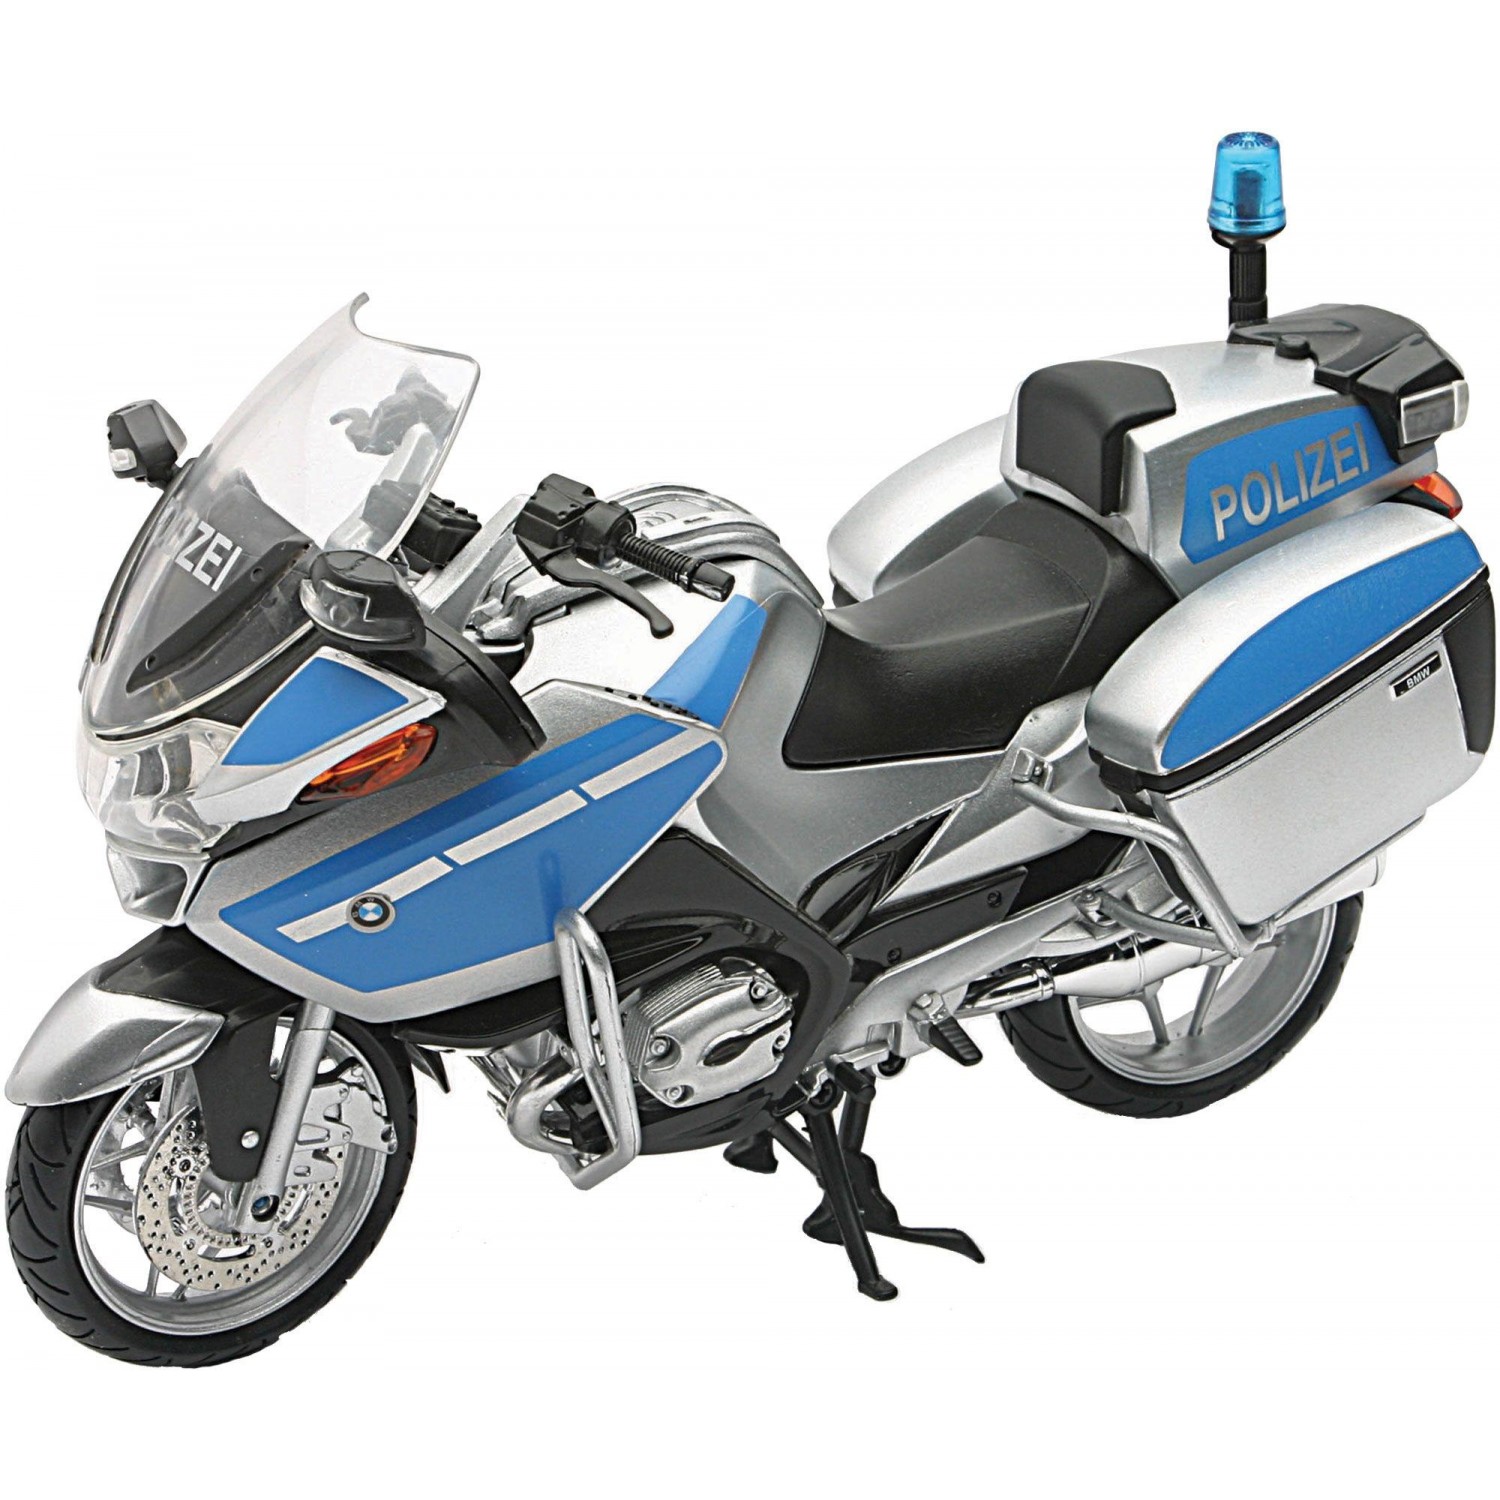  Model motocykla BMW R 1200 RT Police 112 moto